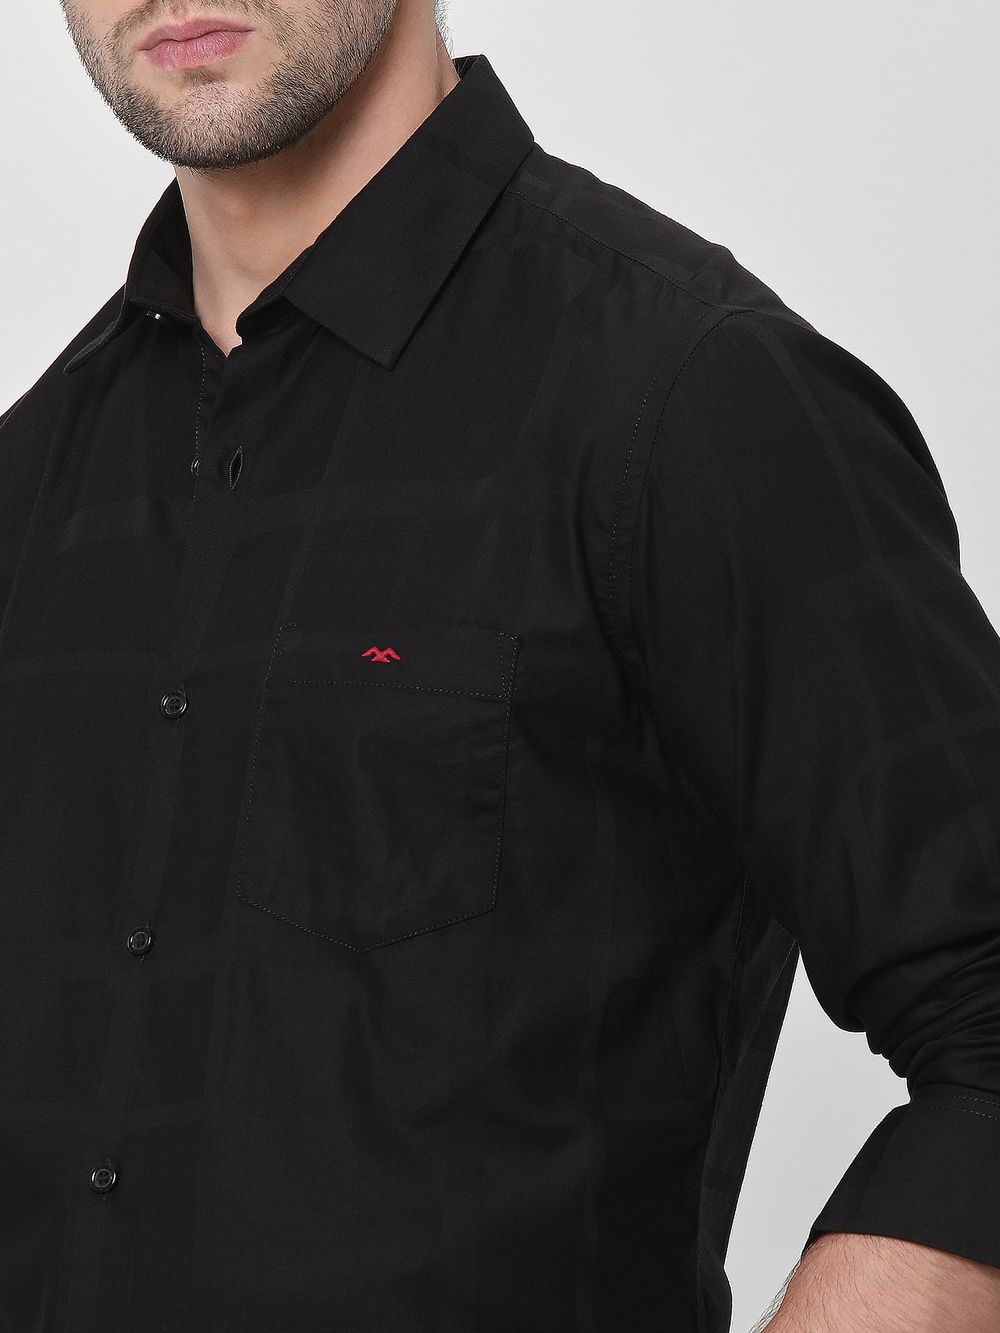 Black Textured Dobby Slim Fit Casual Shirt